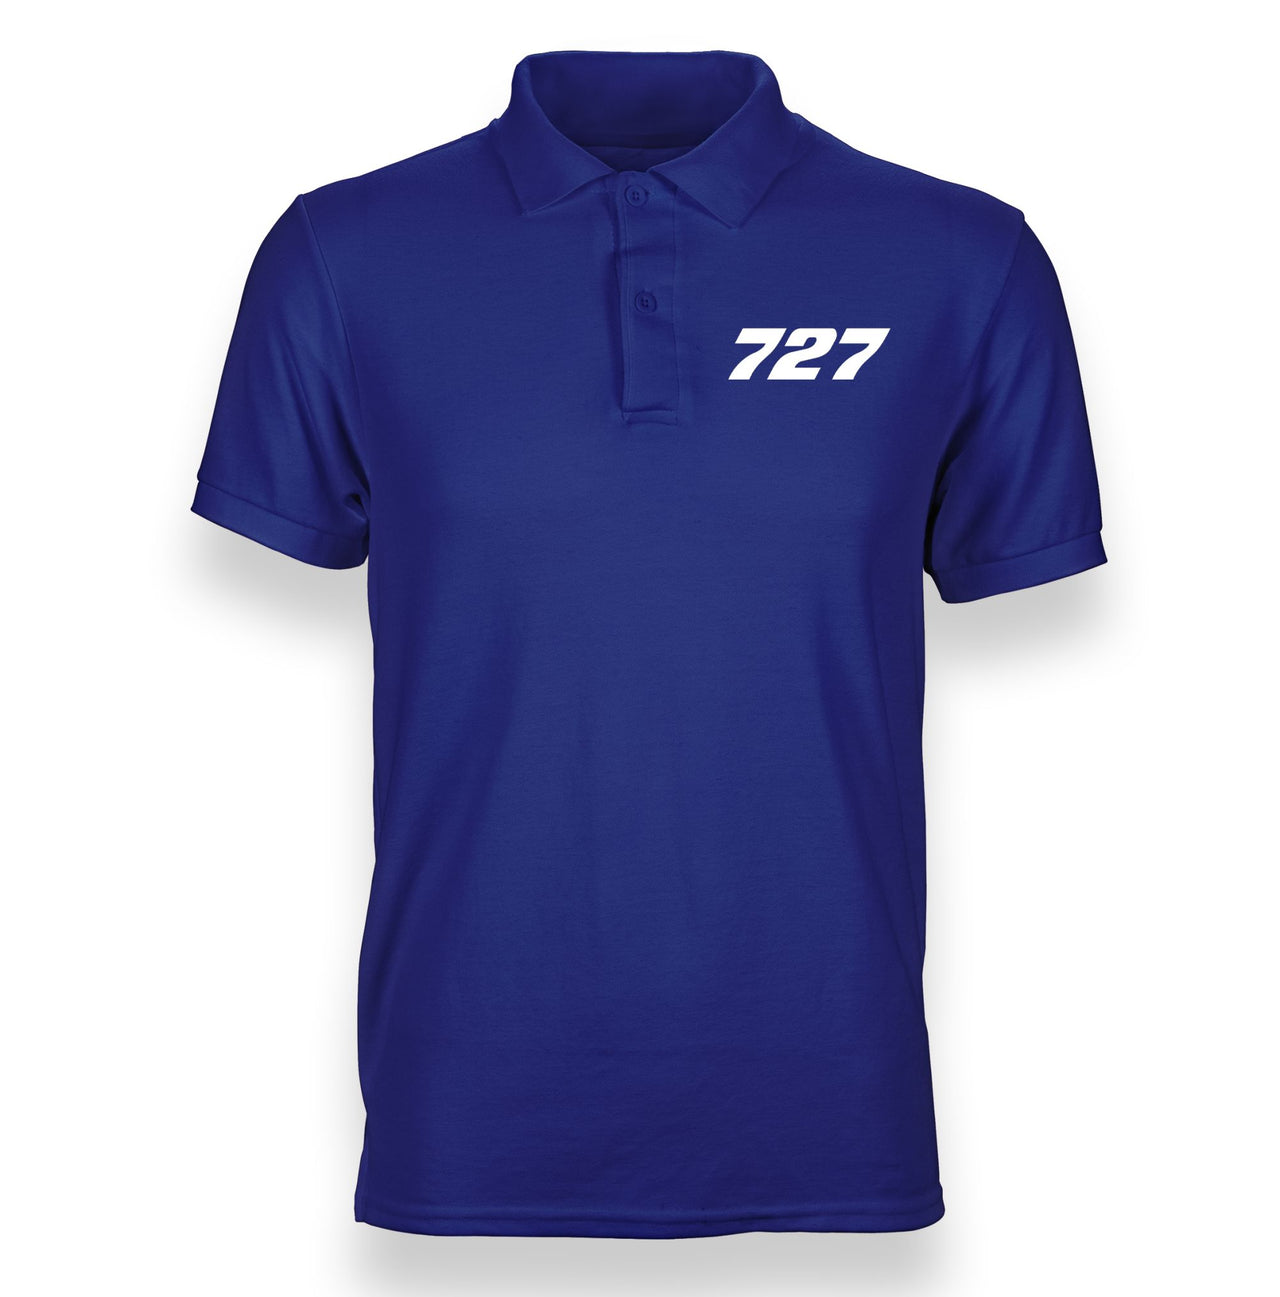 727 Flat Text Designed "WOMEN" Polo T-Shirts